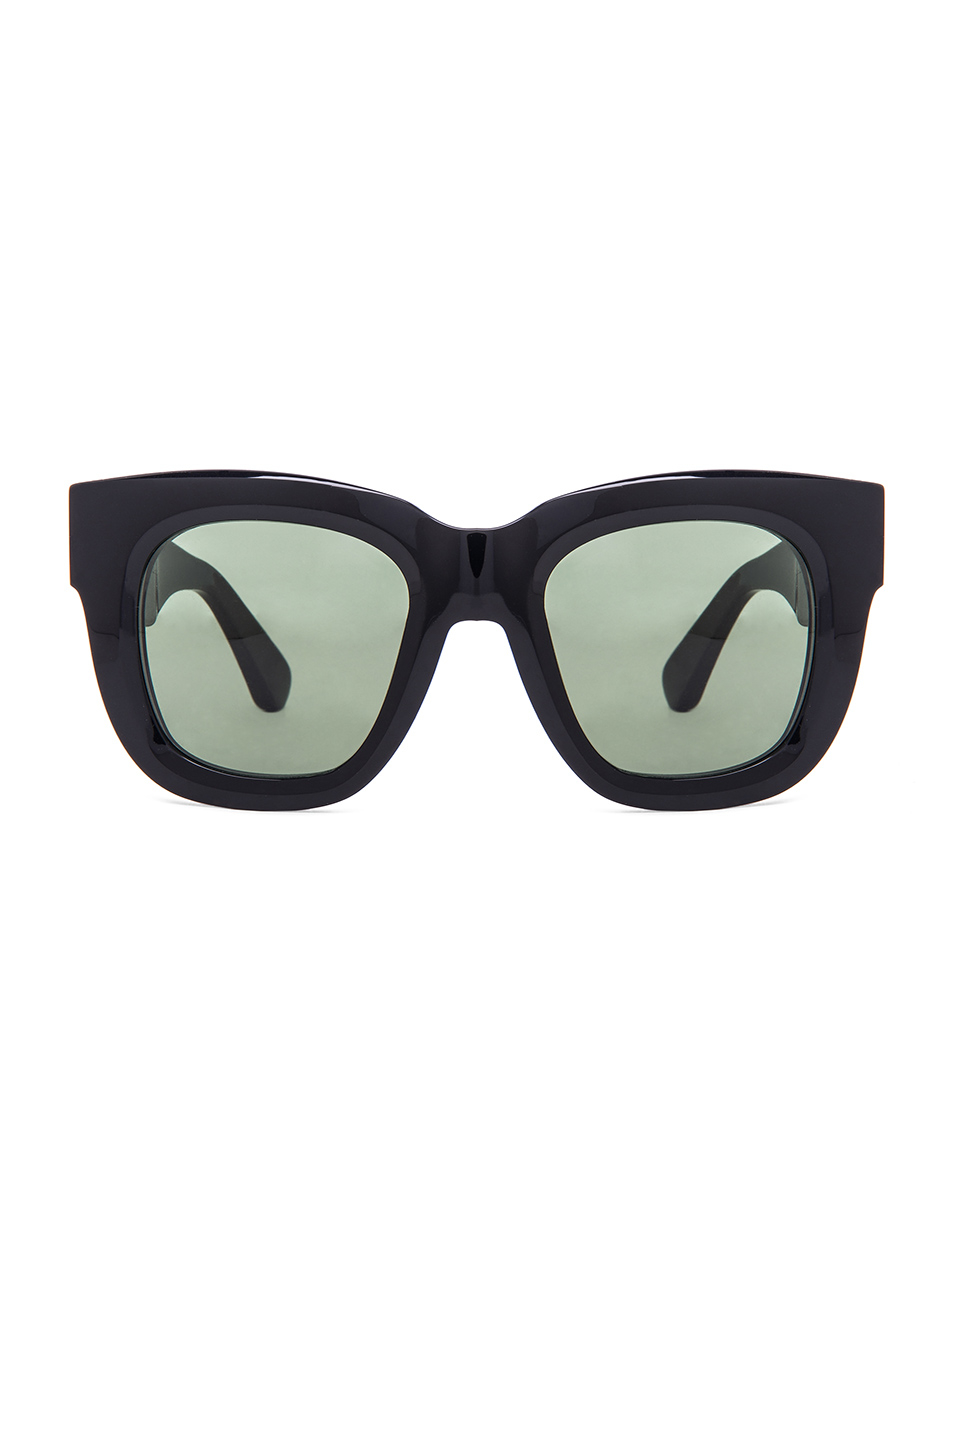 Acne Studios Library Sunglasses in Black - Lyst